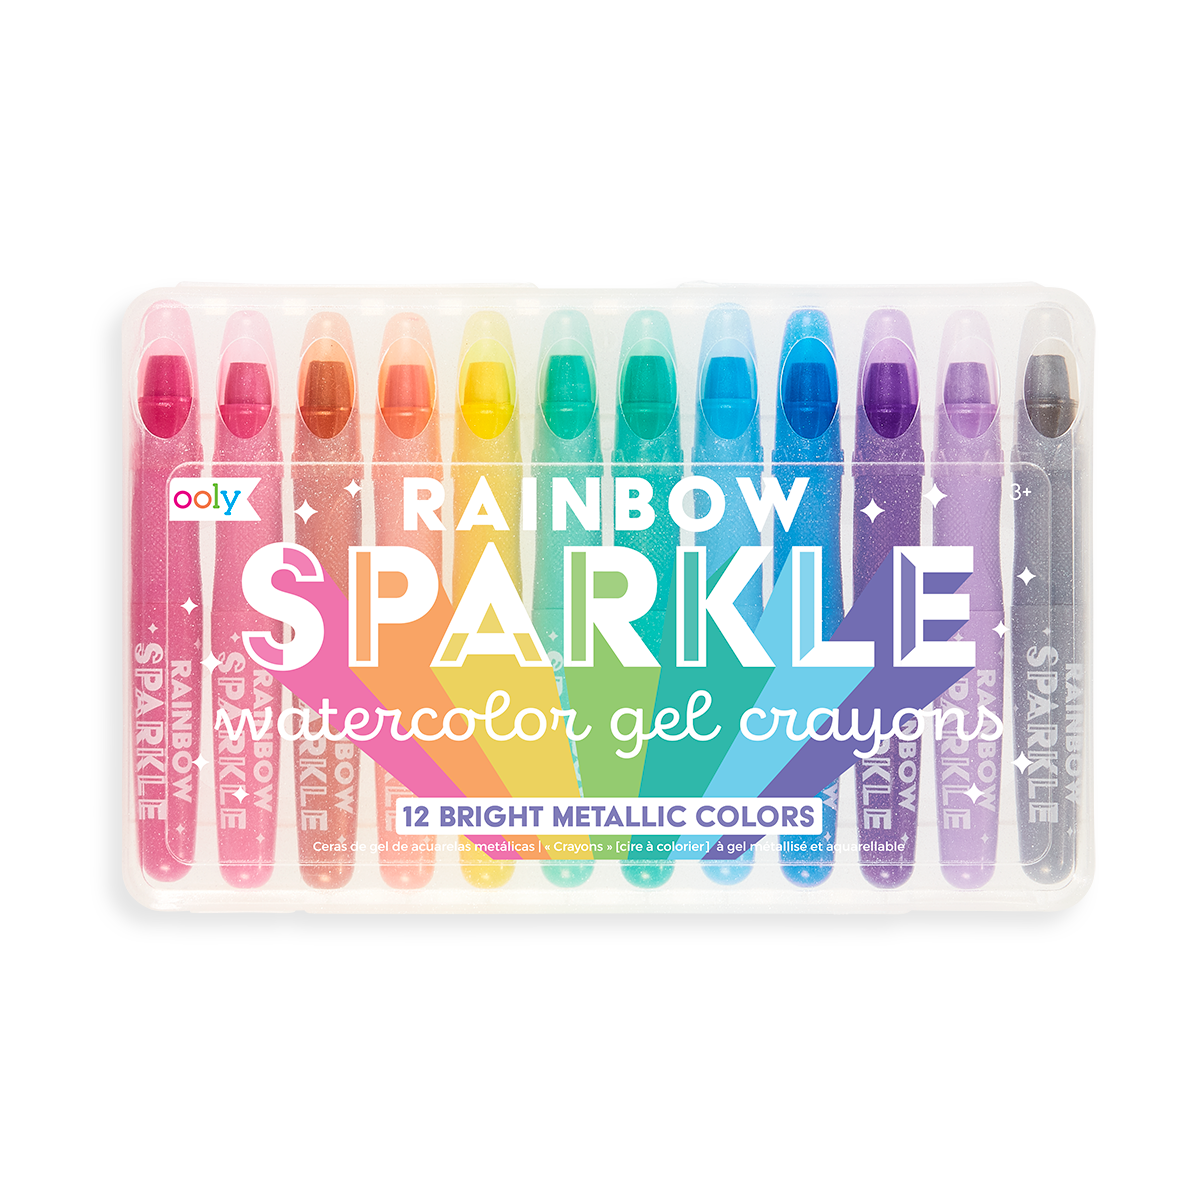 133-57-Rainbow-Sparkle-Watercolor-Gel-Crayon-B1.png